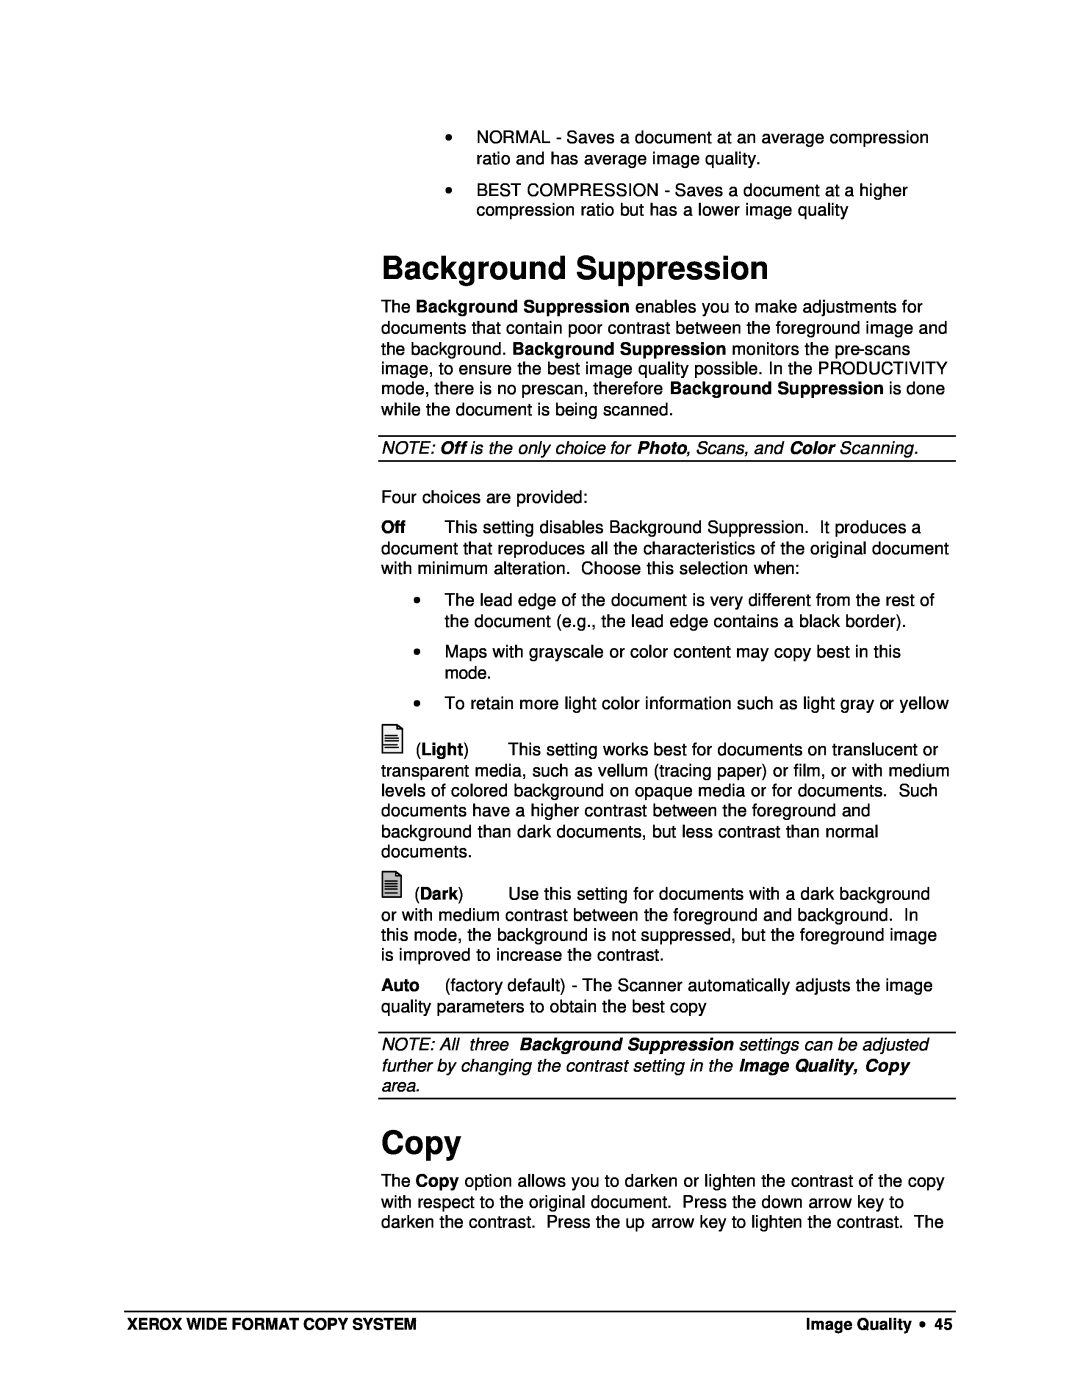 Xerox X2, 8825, 8850, 8830 manual Background Suppression, Copy 